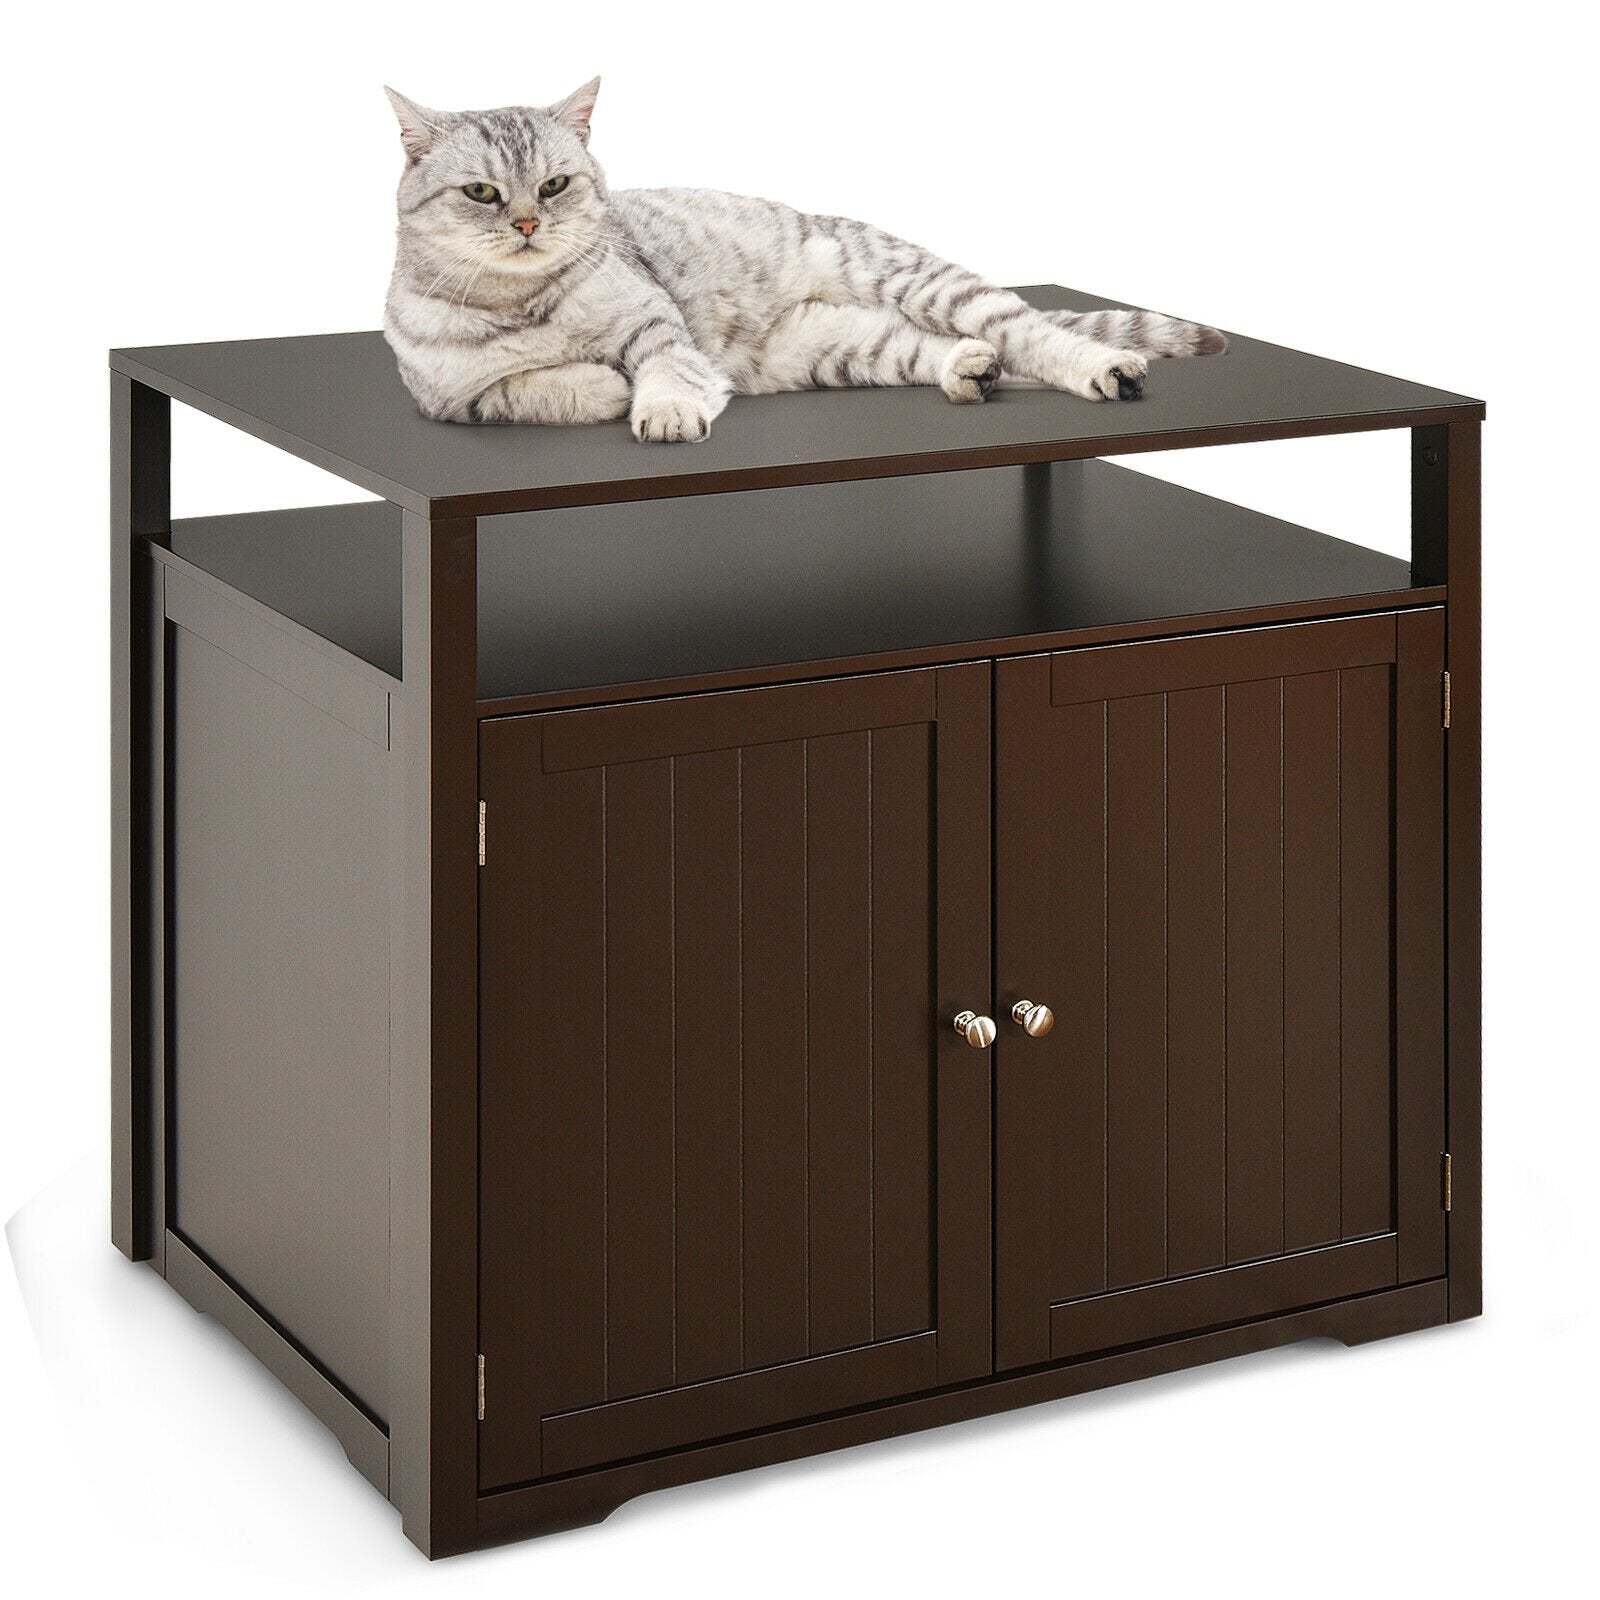 Wooden Cat Litter Box Enclosure Hidden Cat Washroom with Storage Layer, Brown - Gallery Canada